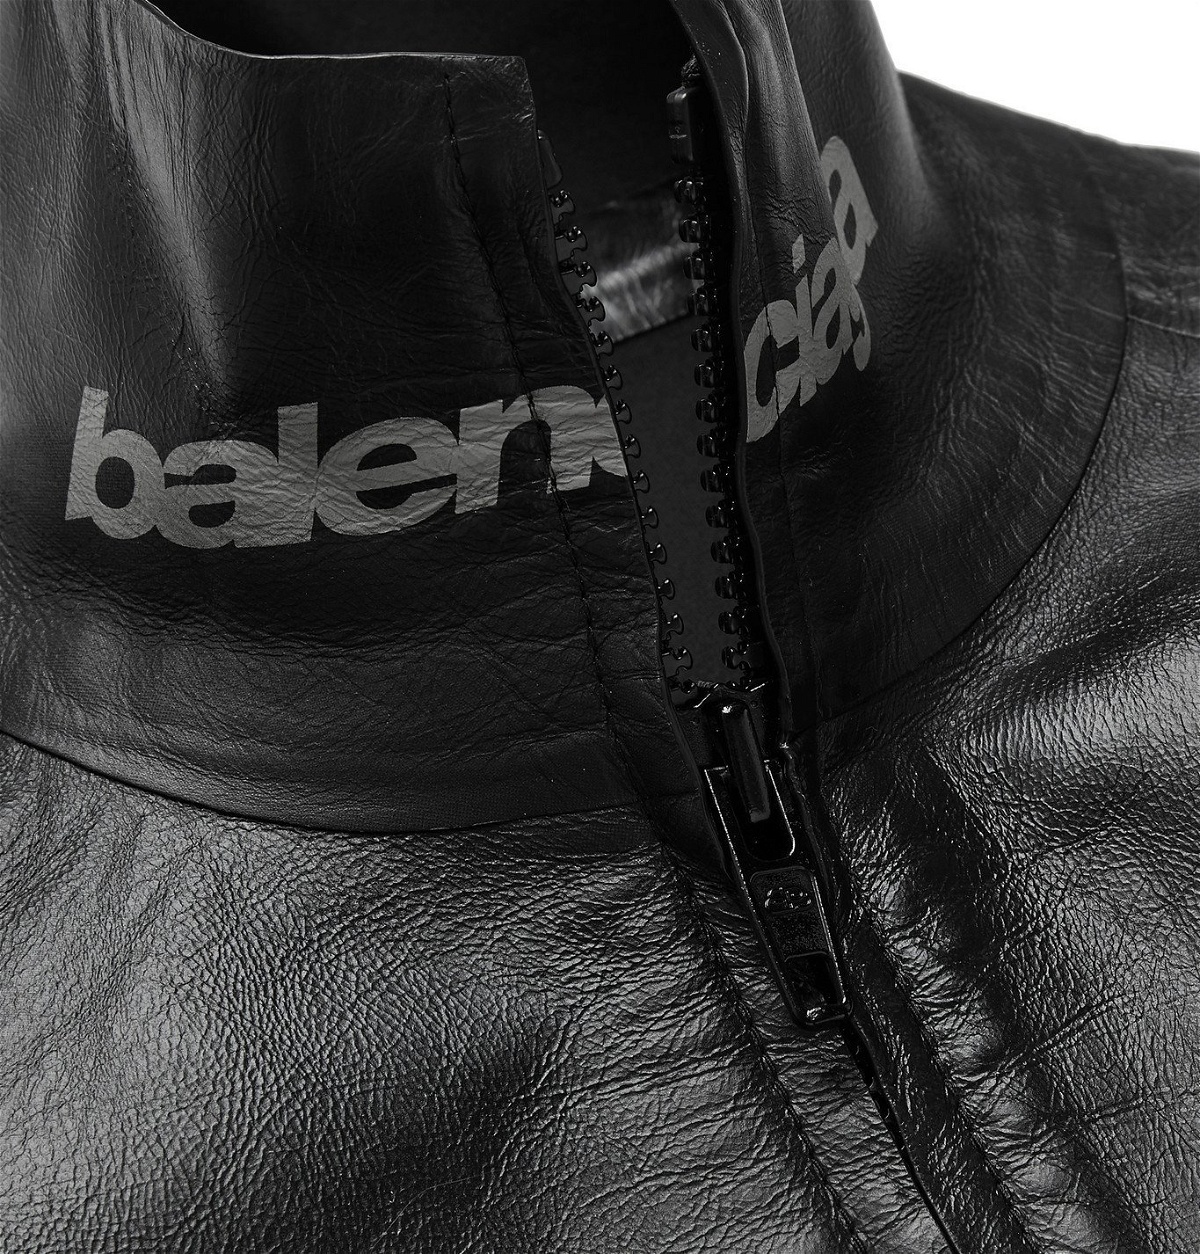 Balenciaga Printed Leather Biker Jacket In Black